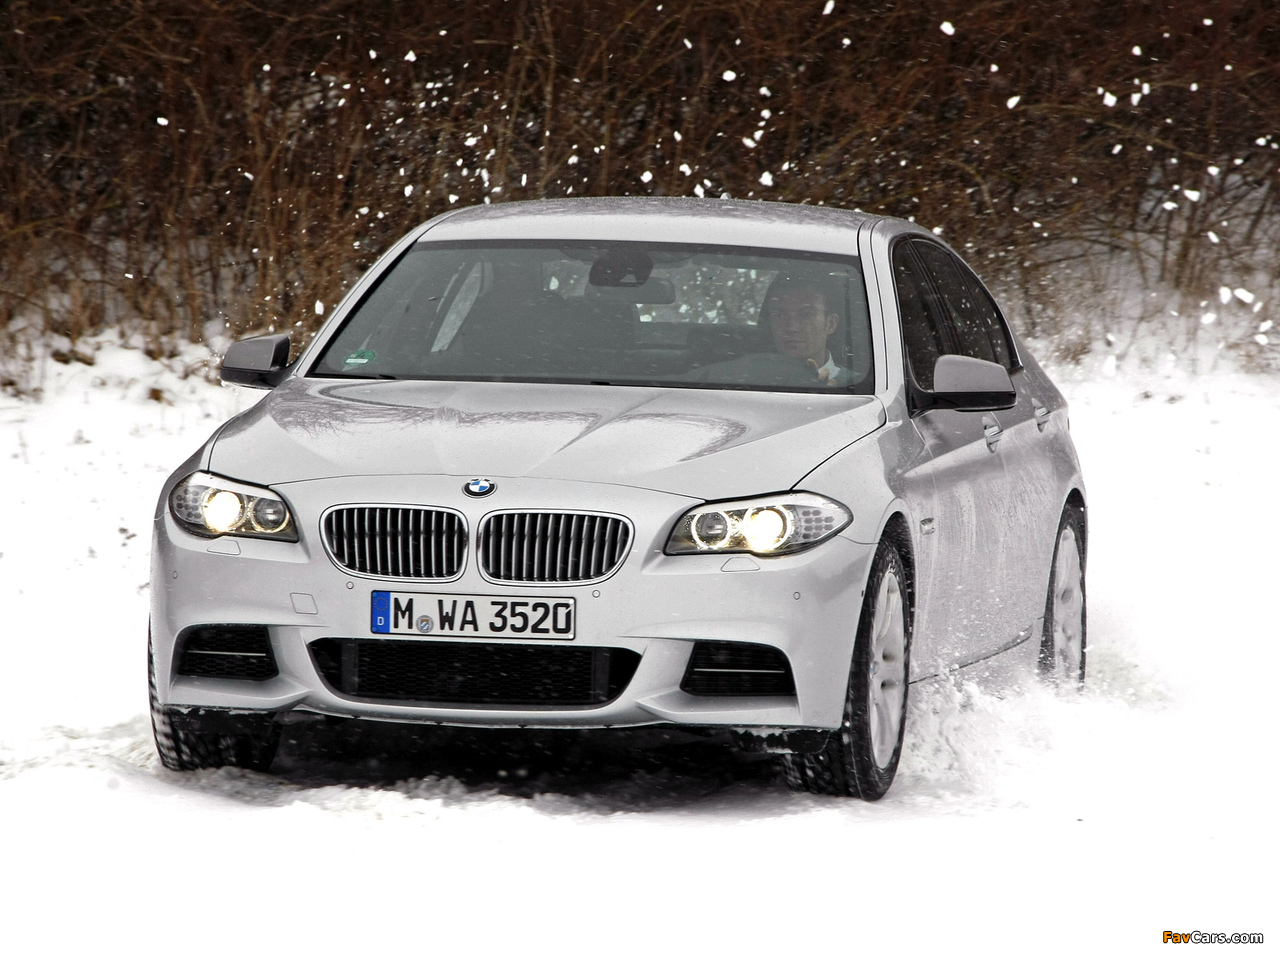 BMW M550d xDrive Sedan (F10) 2012 pictures (1280 x 960)